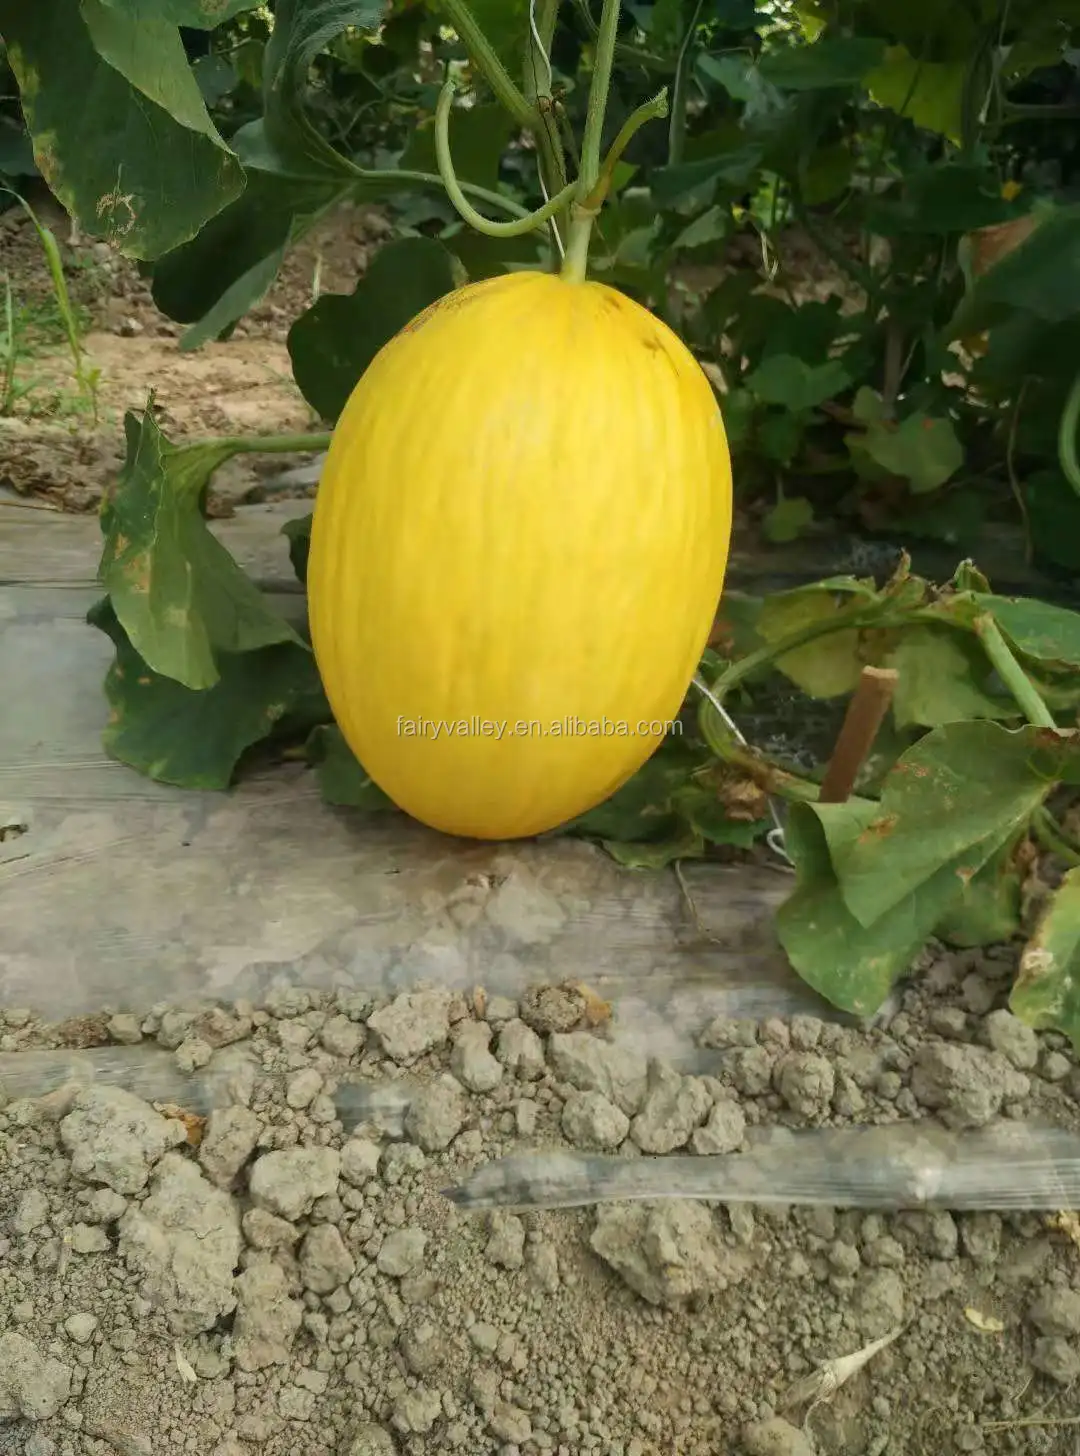 buttercup yellow melon